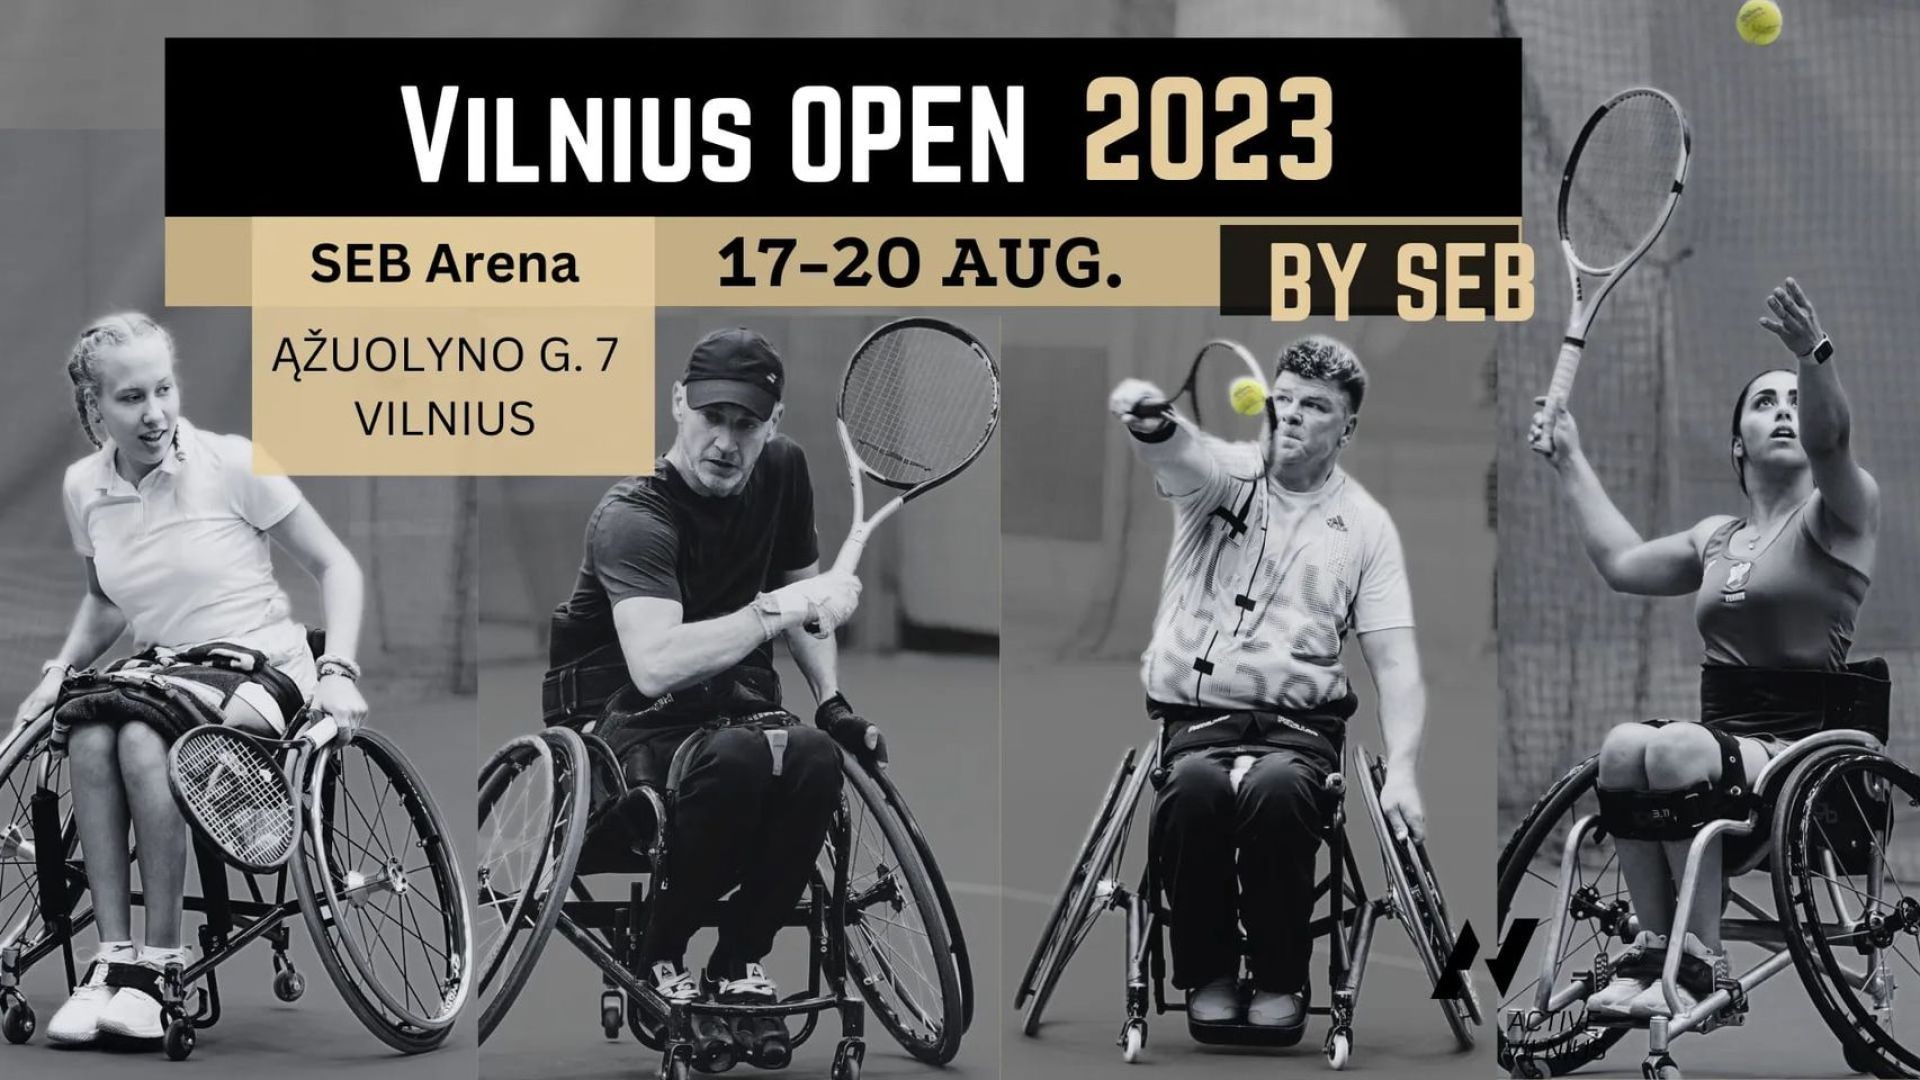 COURT 9 DAY 1 - VILNIIUS OPEN 2023 BY SEB